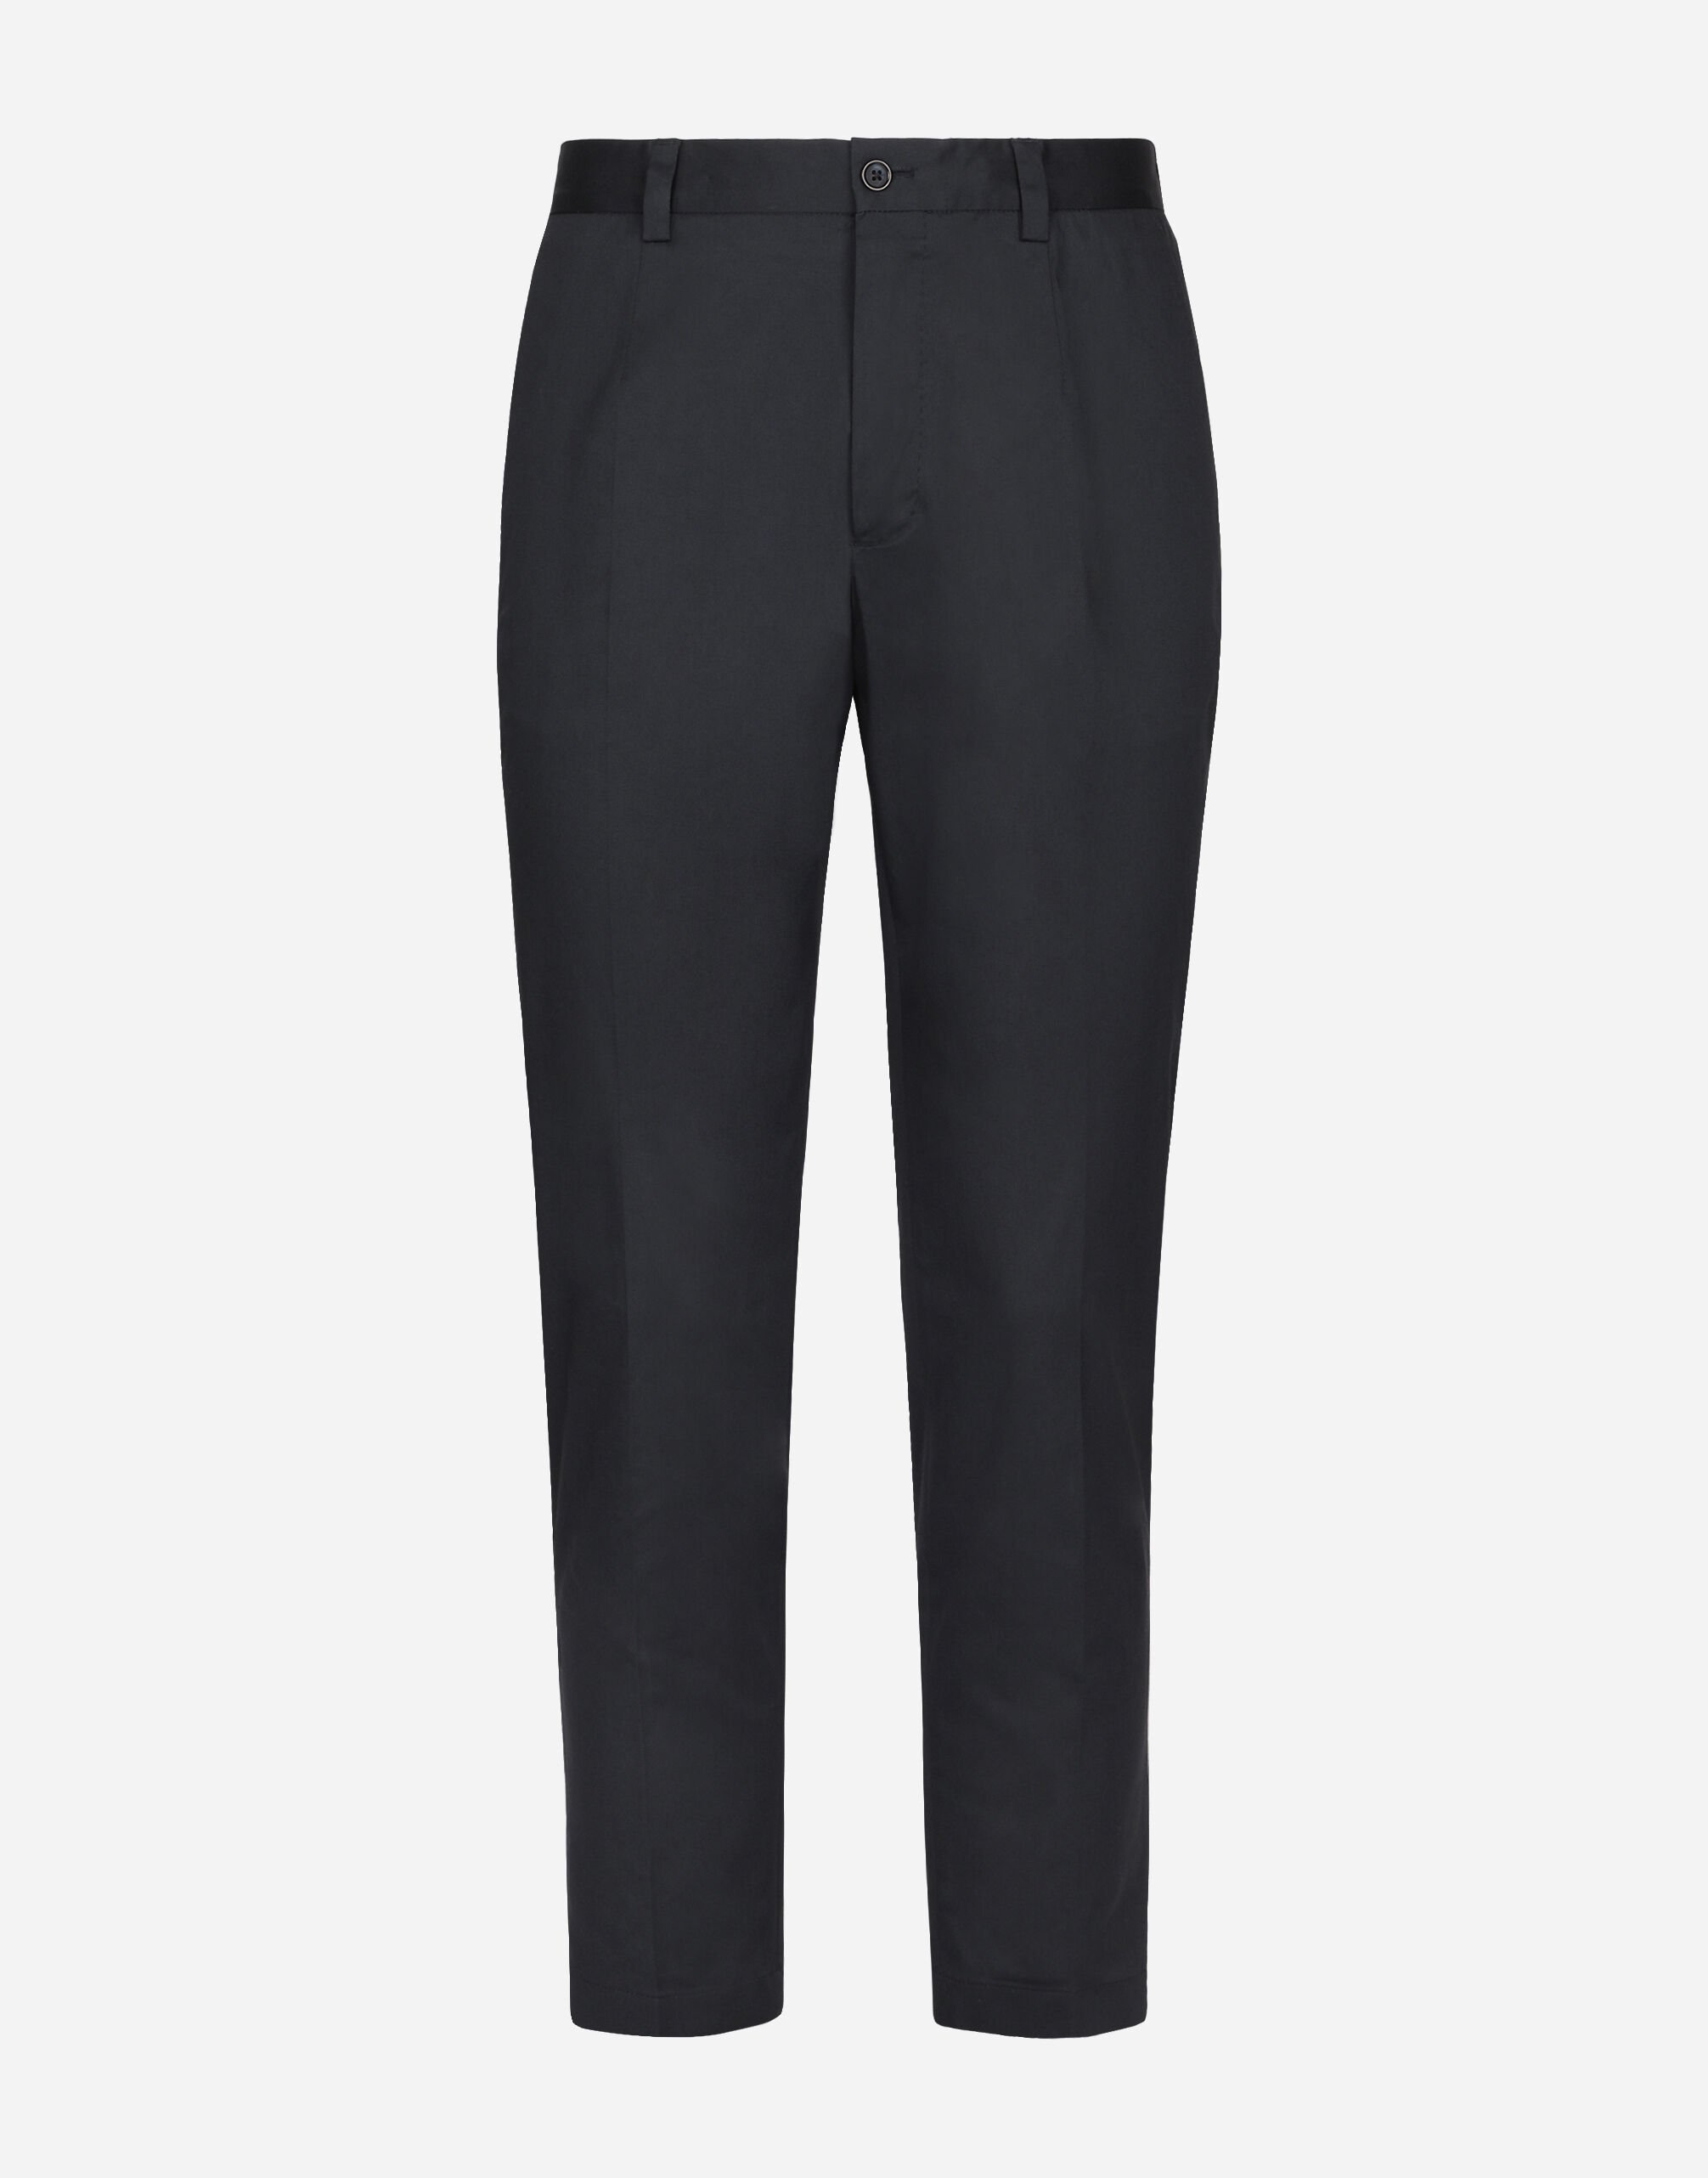 Dolce & Gabbana Stretch cotton pants Black G8PL4TG7F2H